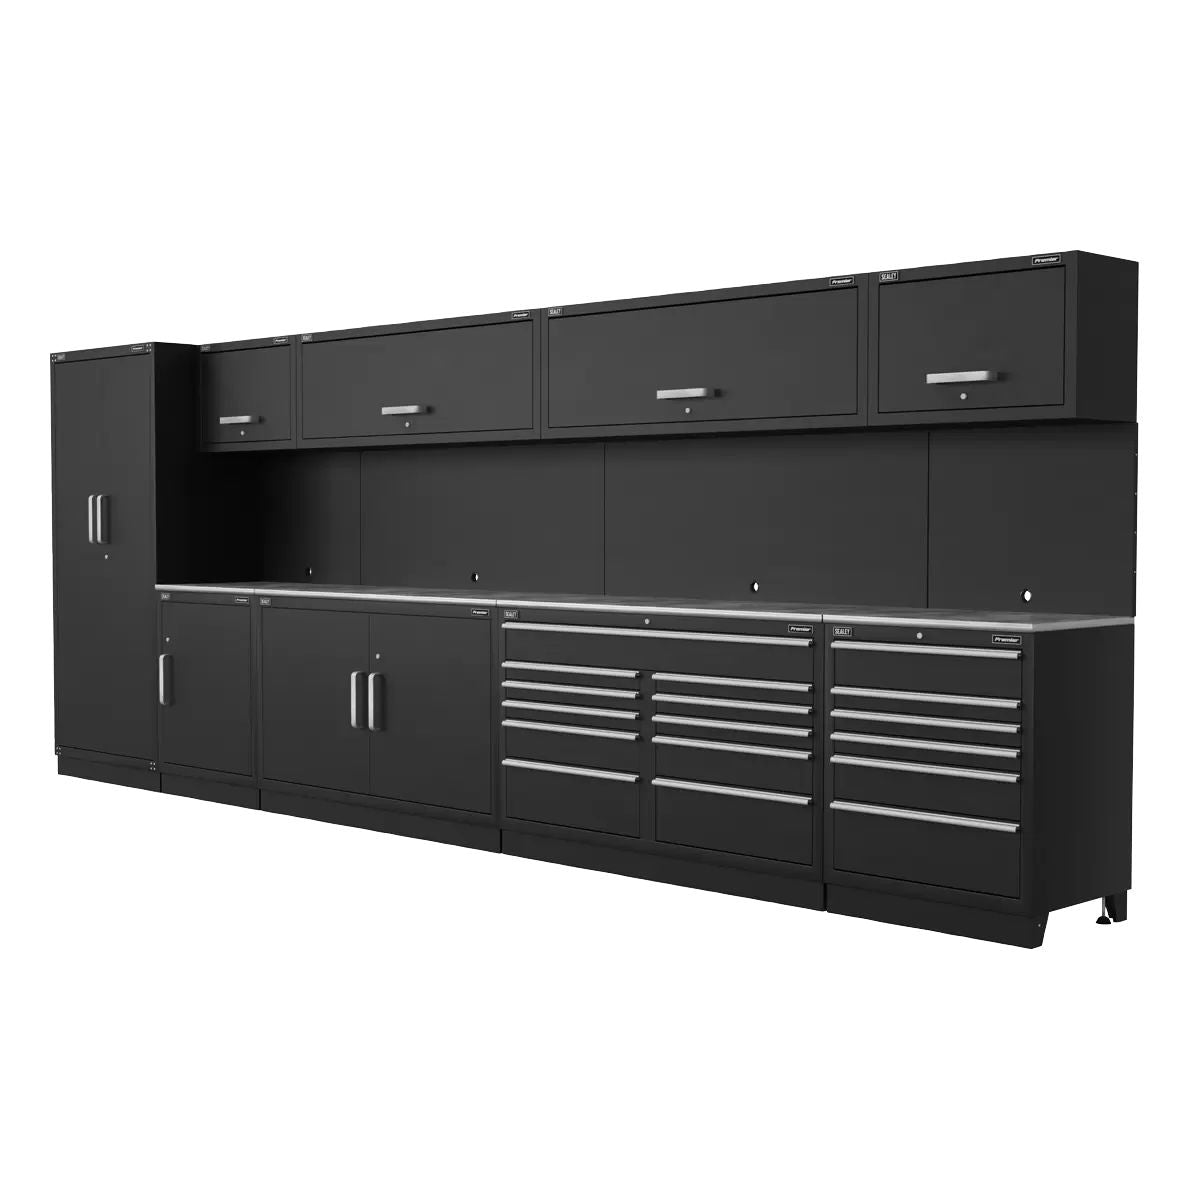 Sealey APMSSTEEL Premier 5.6m Storage System Stainless Worktop